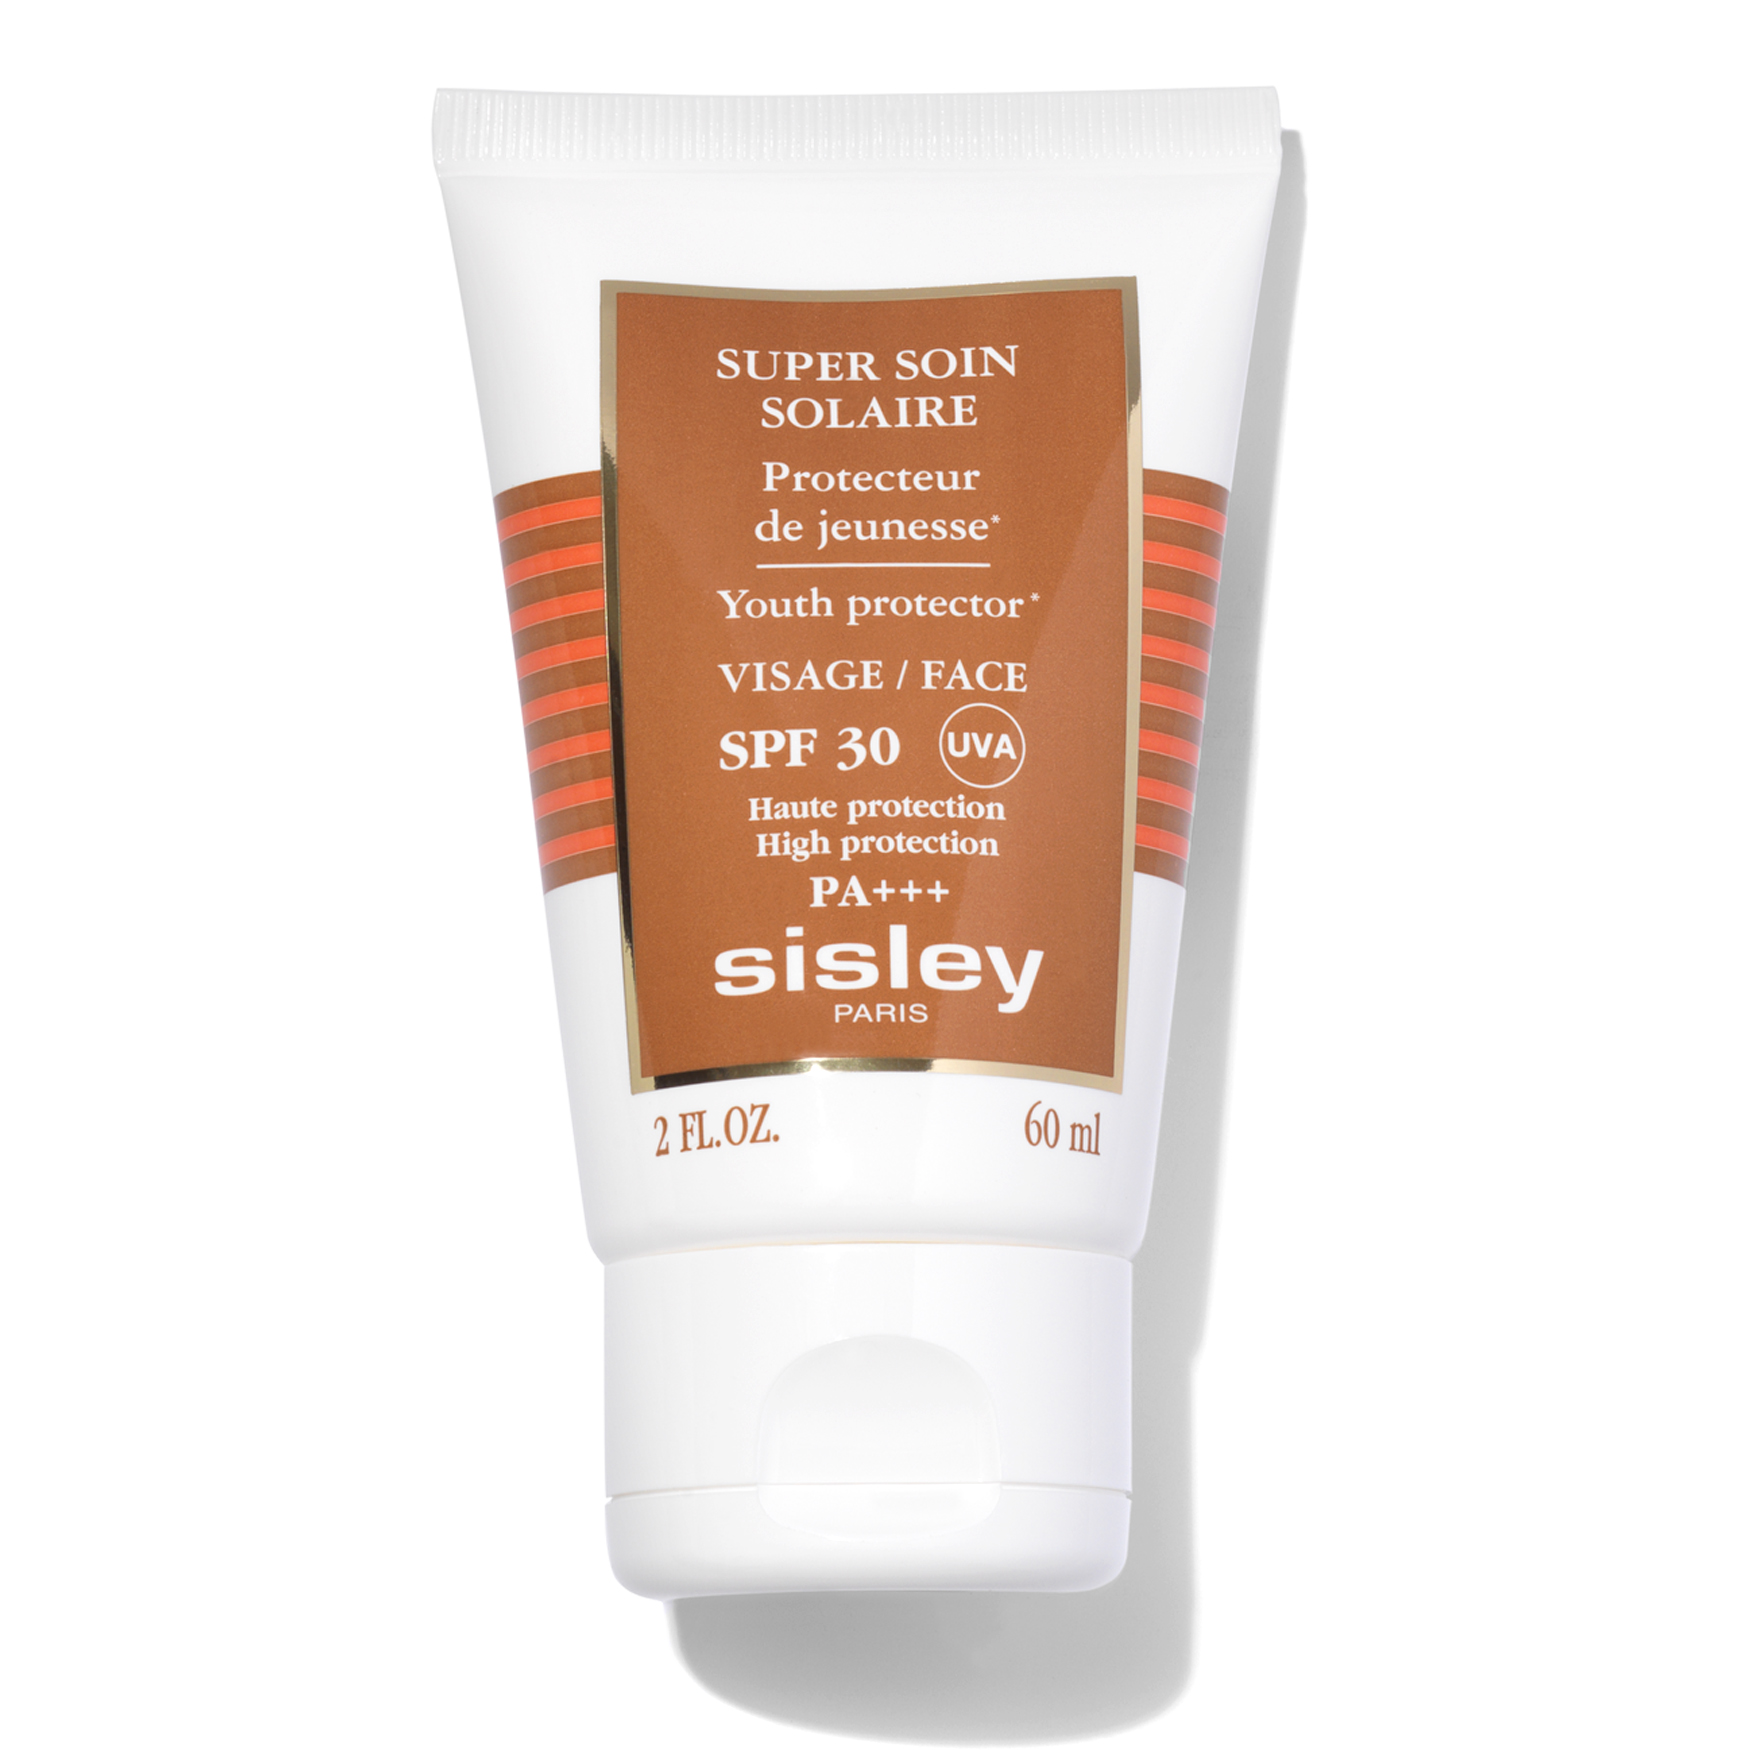 Sisley-Paris Super Soin Solaire Facial Youth Protector SPF30 | Space NK